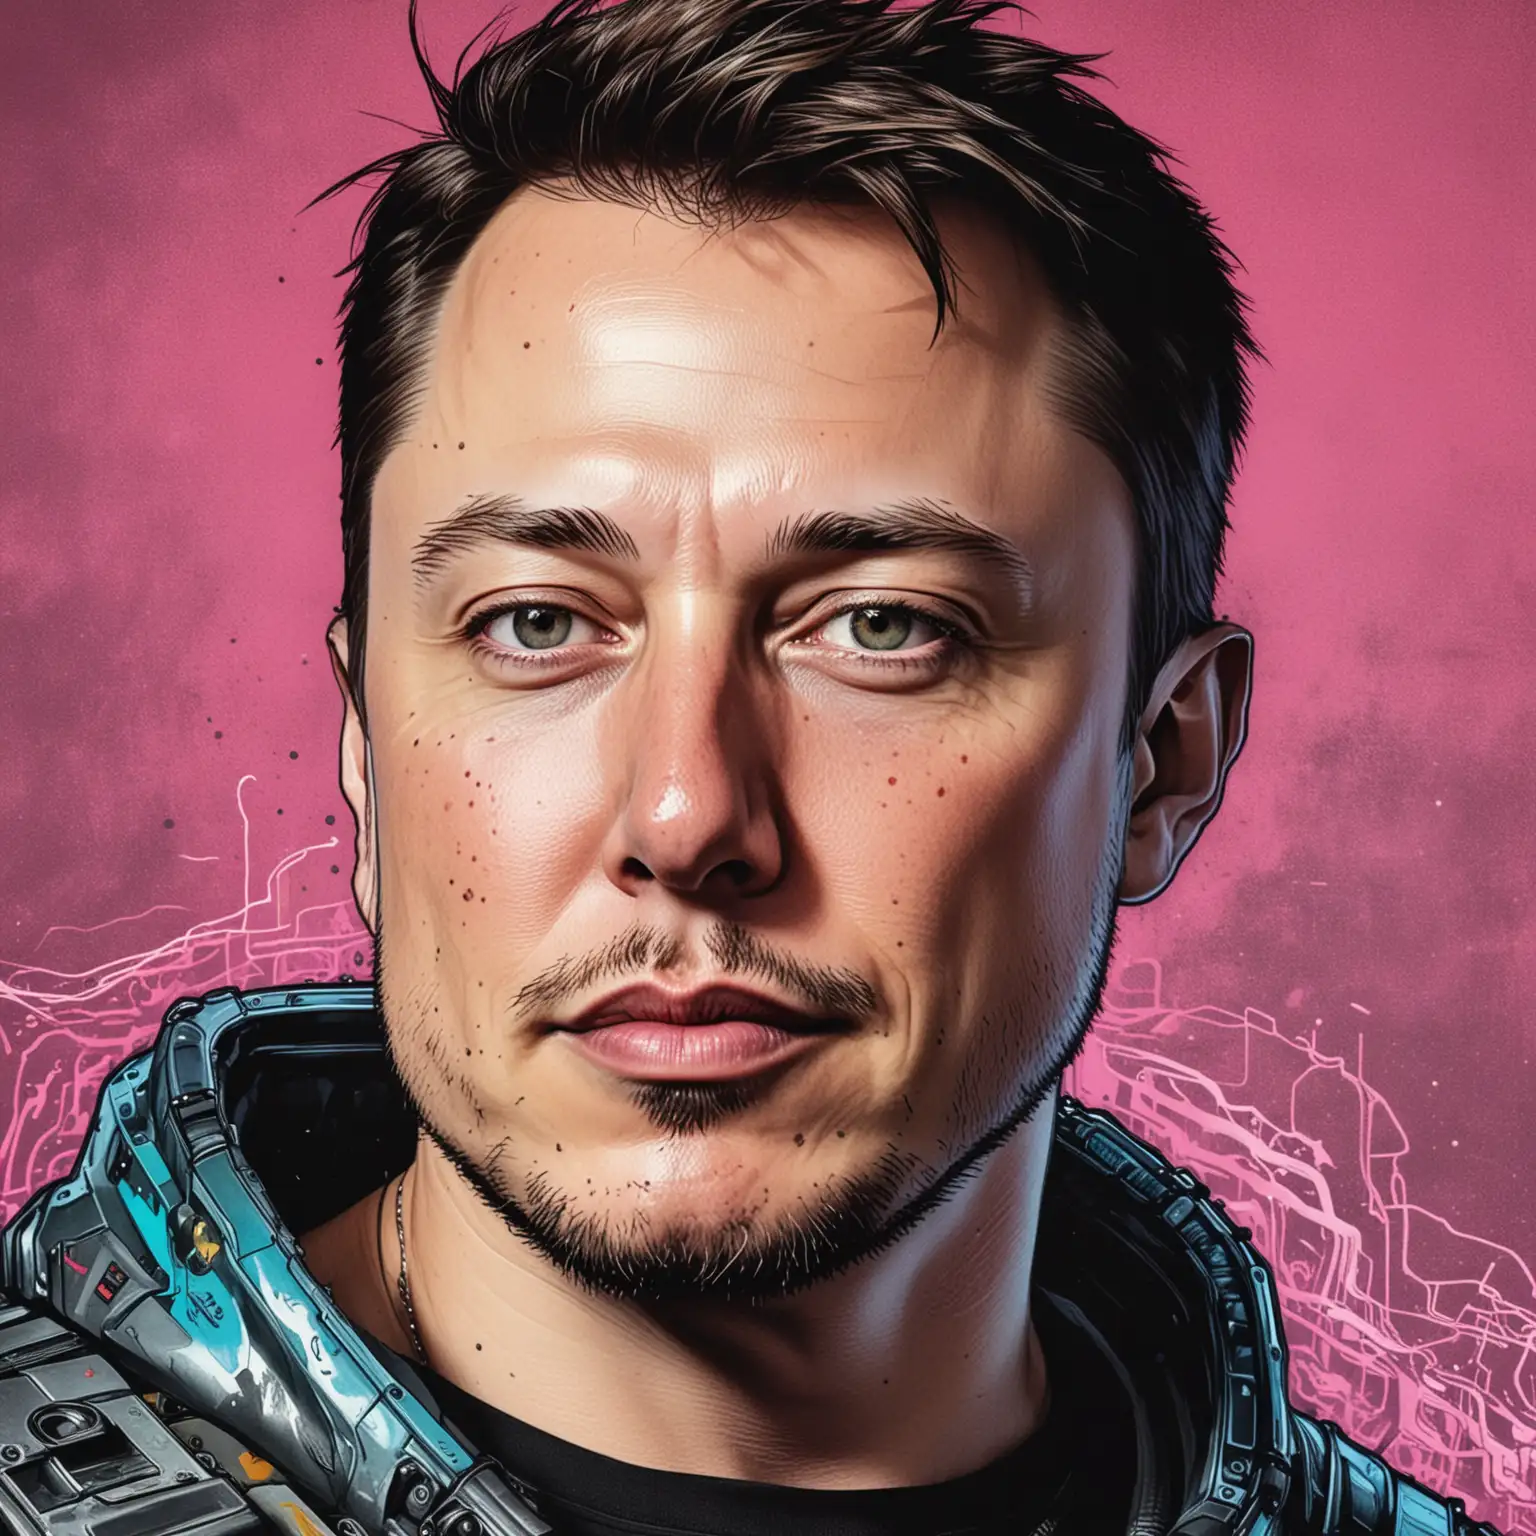 Cyberpunk Elon Musk CloseUp Portrait in Comic Art Style